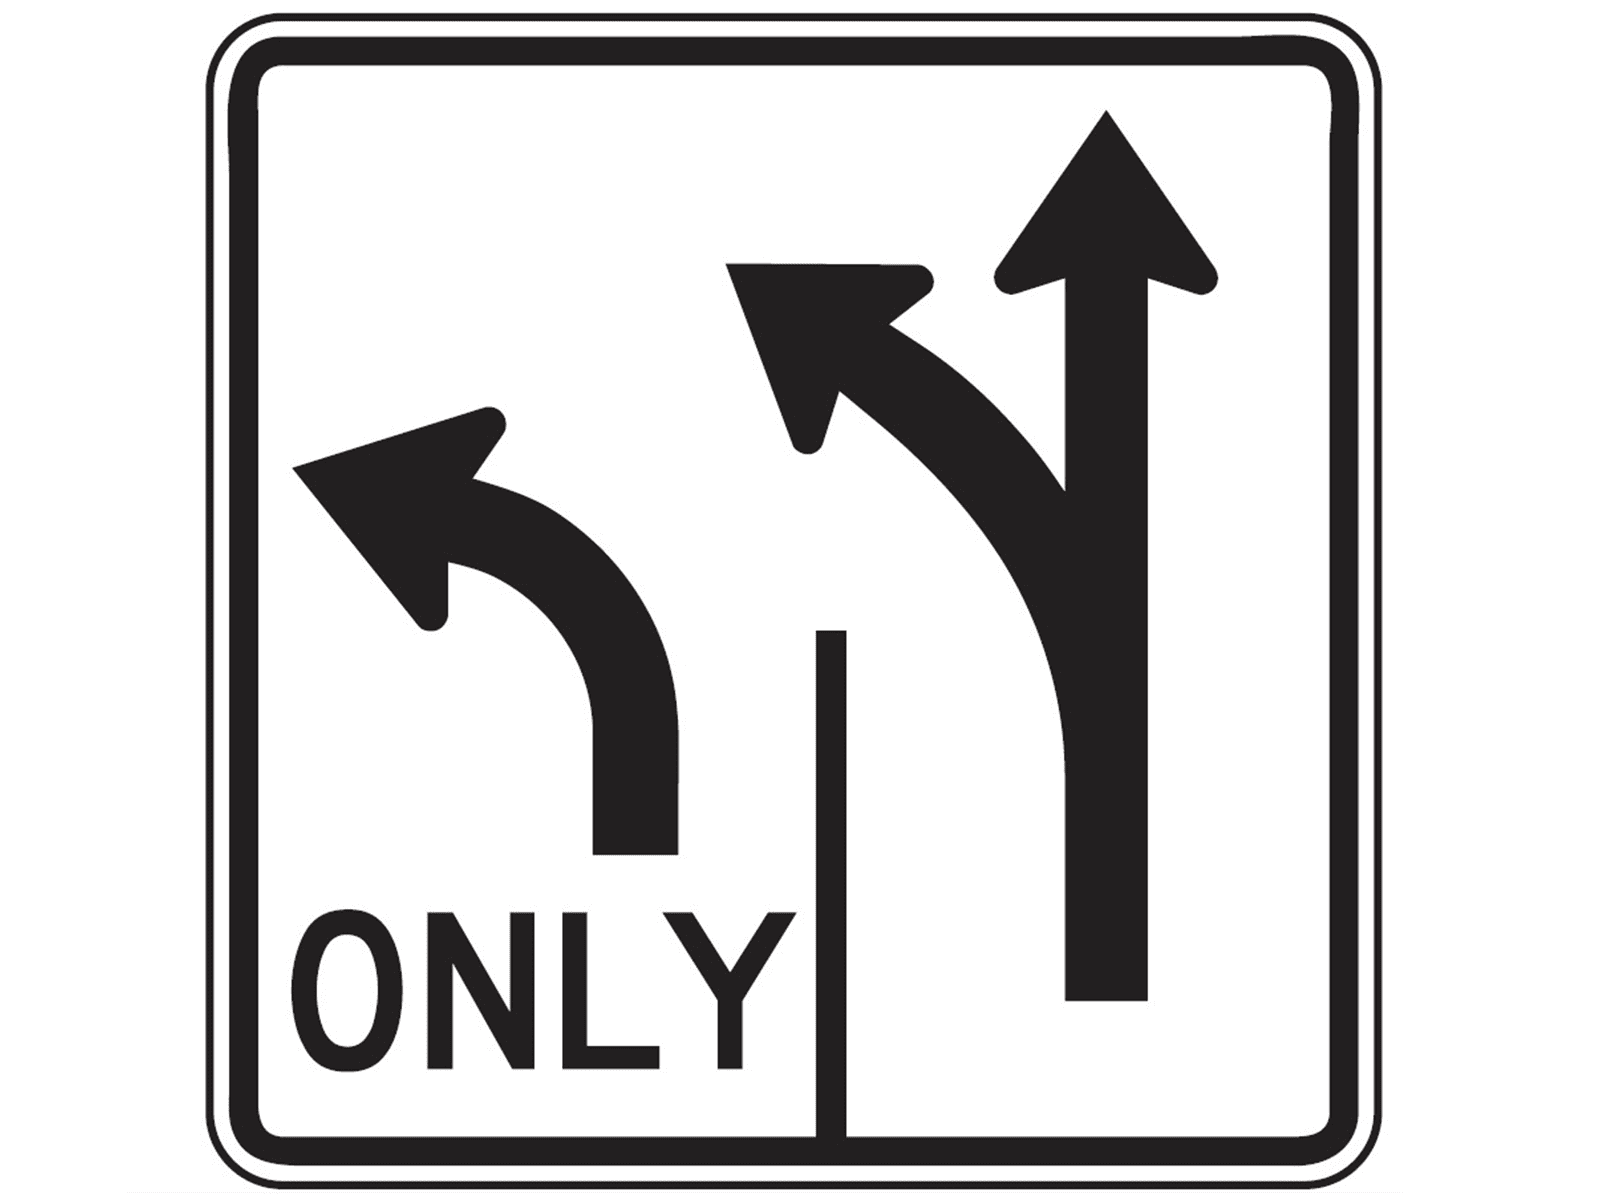 Lane Use Control Sign R3-8 - R3: Lane Usage and Turns